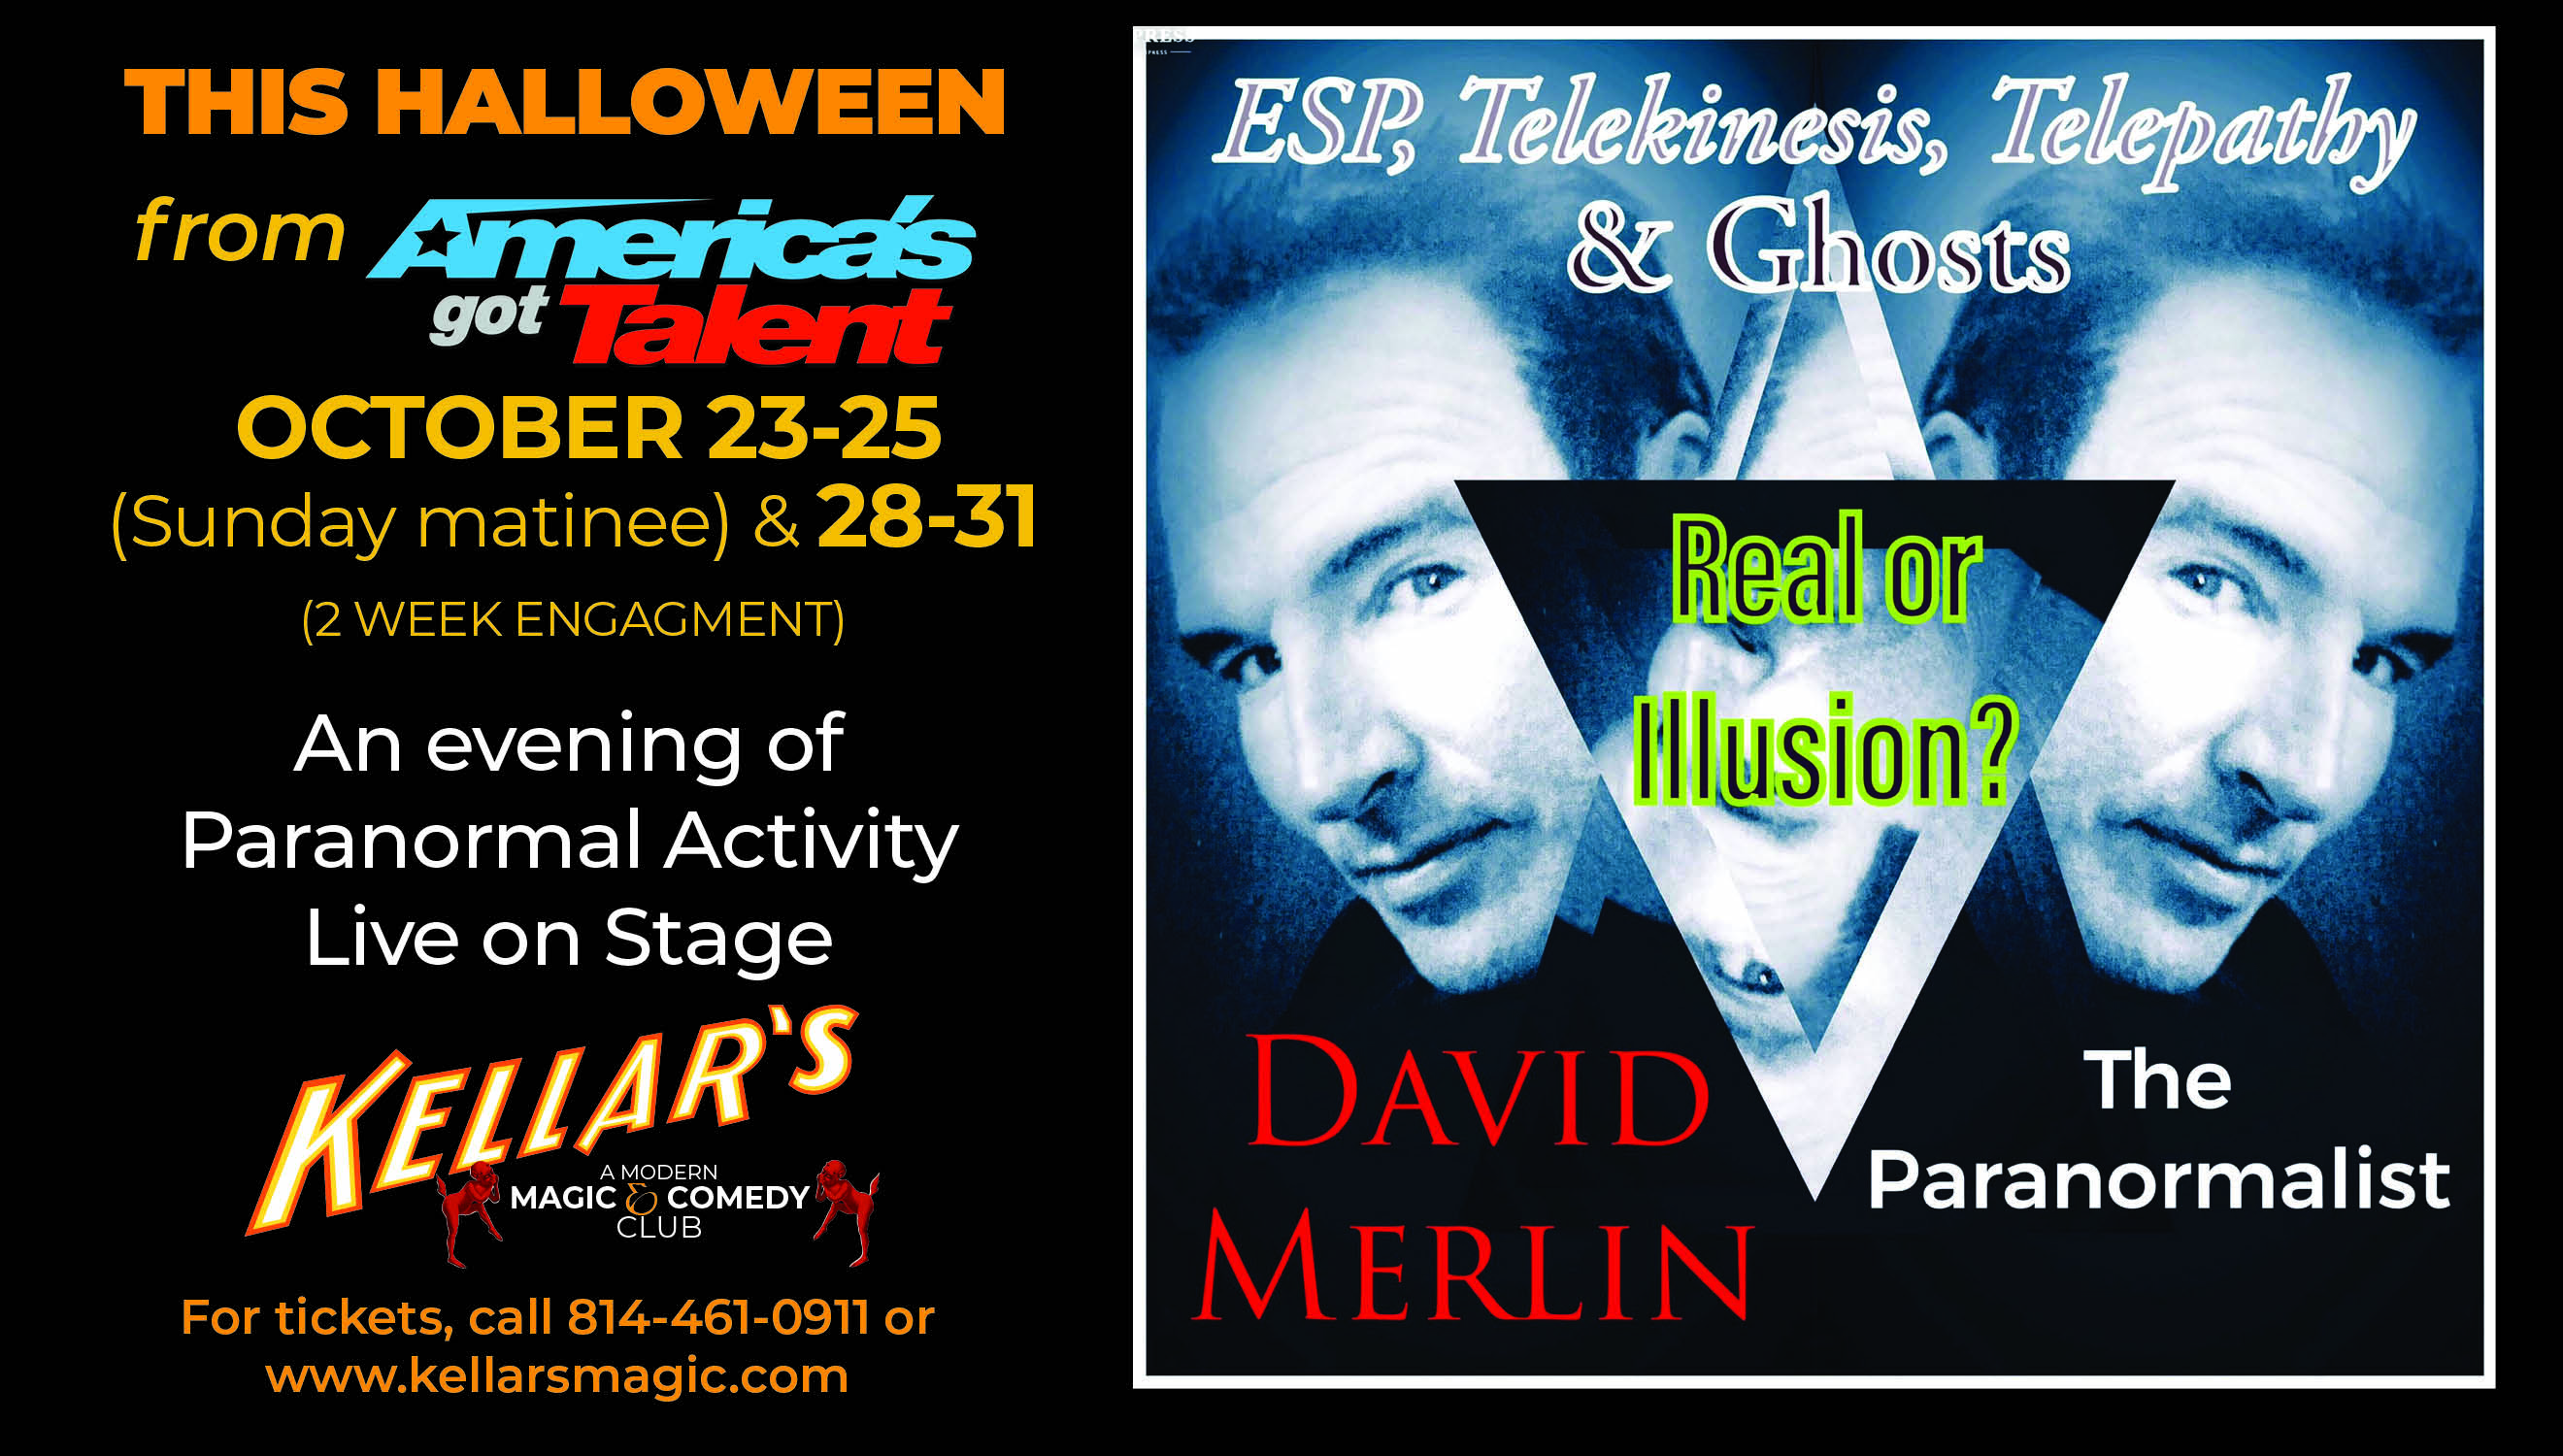 Kellar's Magic & Comedy Club presents David Merlin The Paranormalist